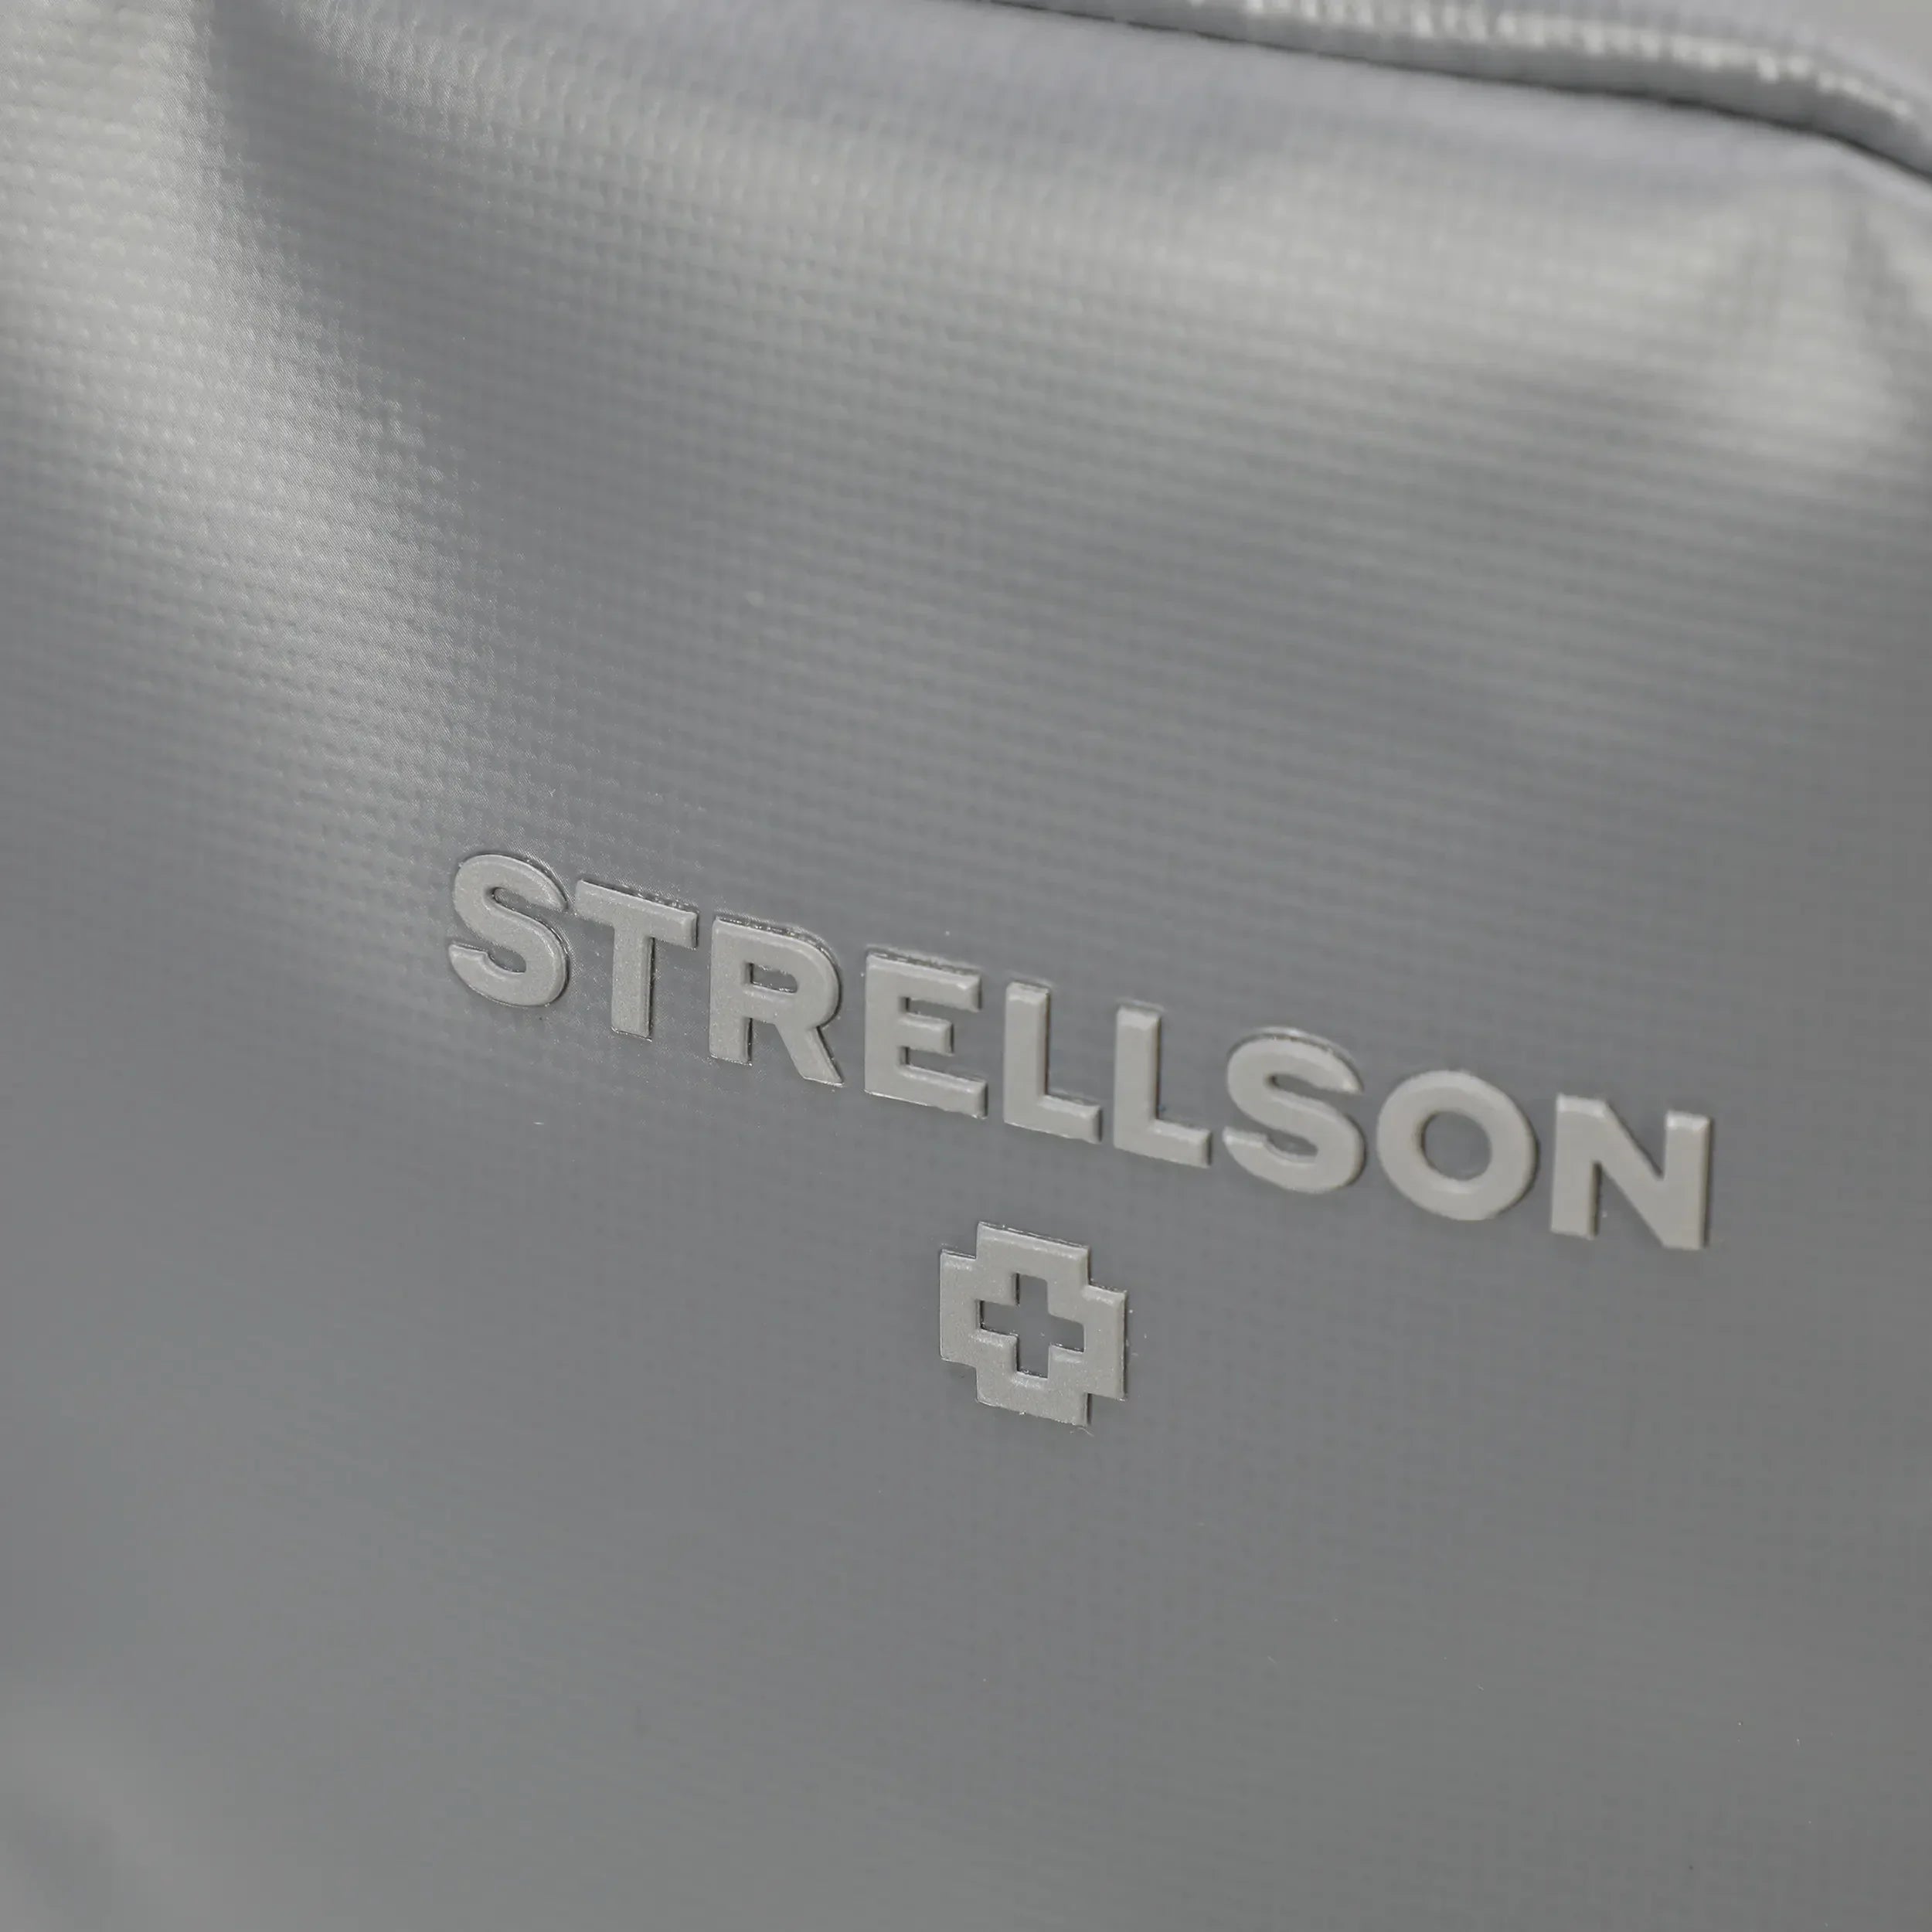 Strellson Stockwell 2.0 Marcus Shoulderbag XSVZ 21 cm - Darkblue